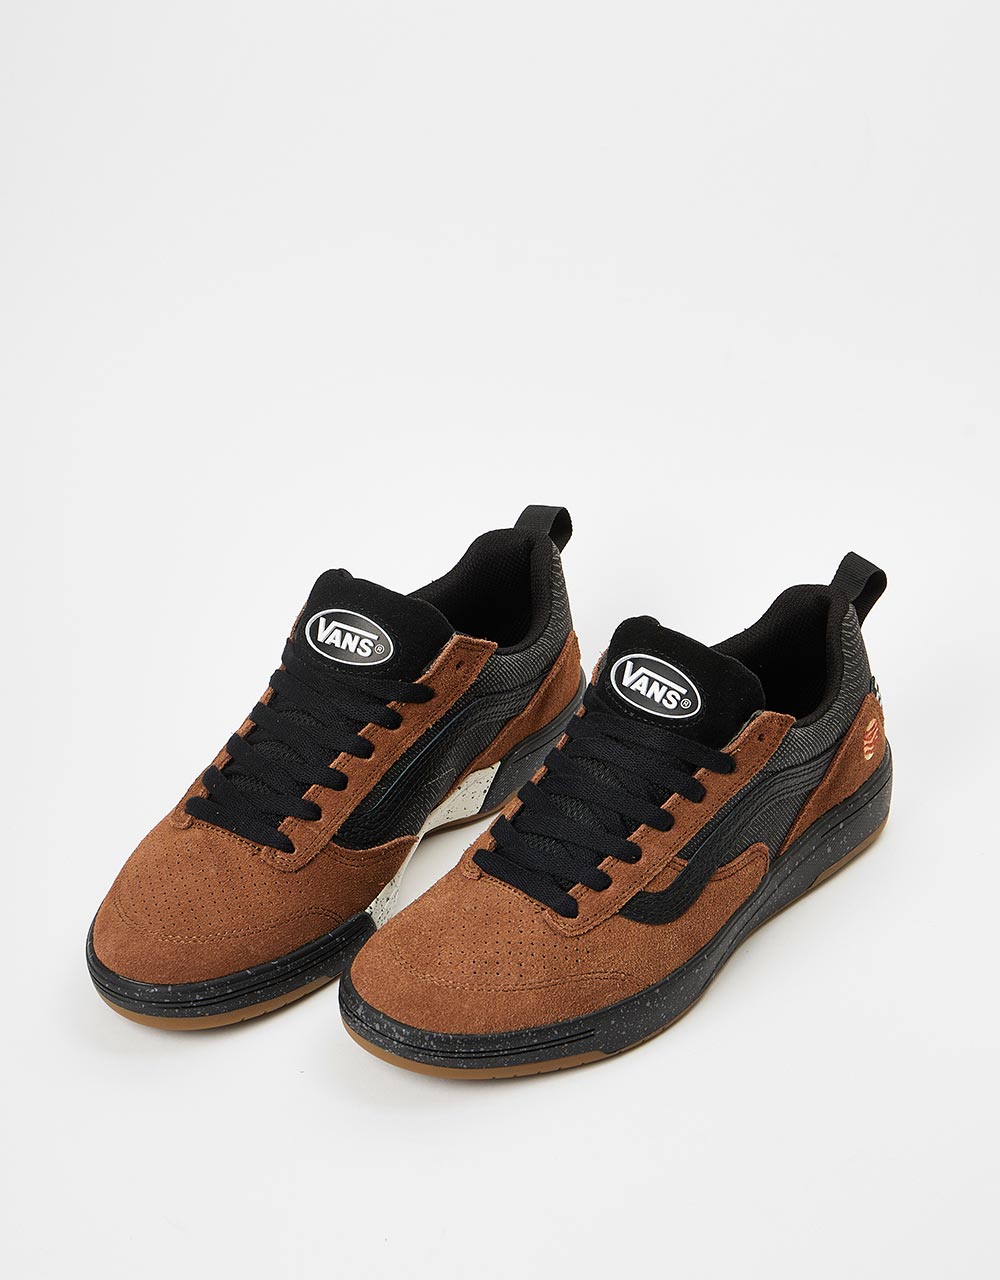 Vans Zahba Skate Shoes - Brown/Multi